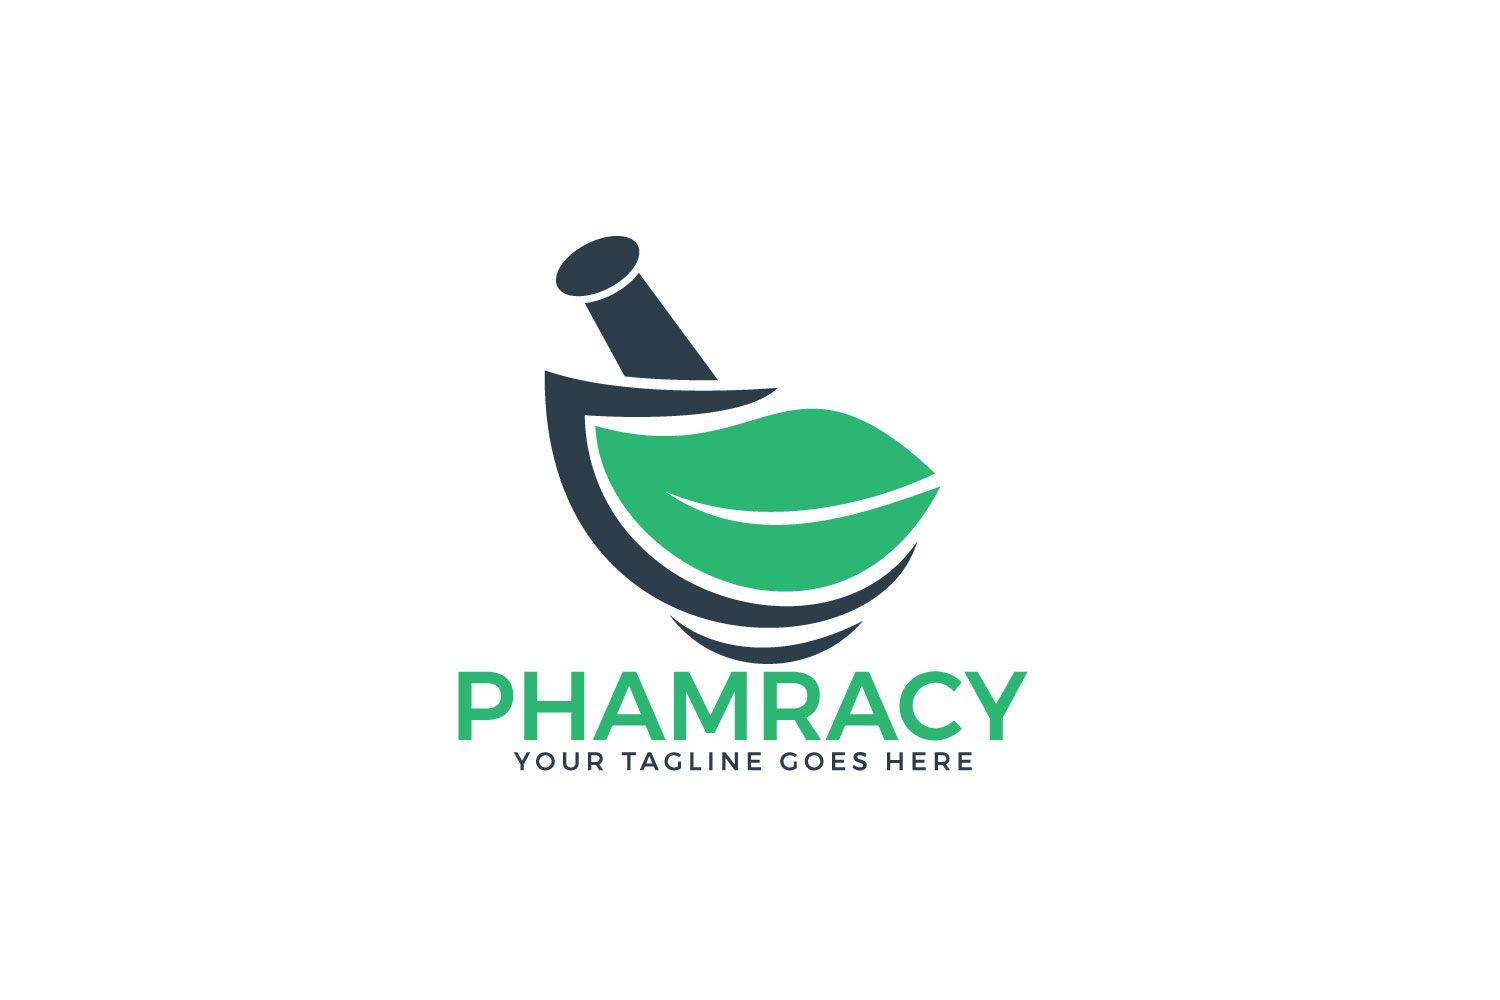 Mortar Logo - Pharmacy medical logo. Natural mortar and pestle logo